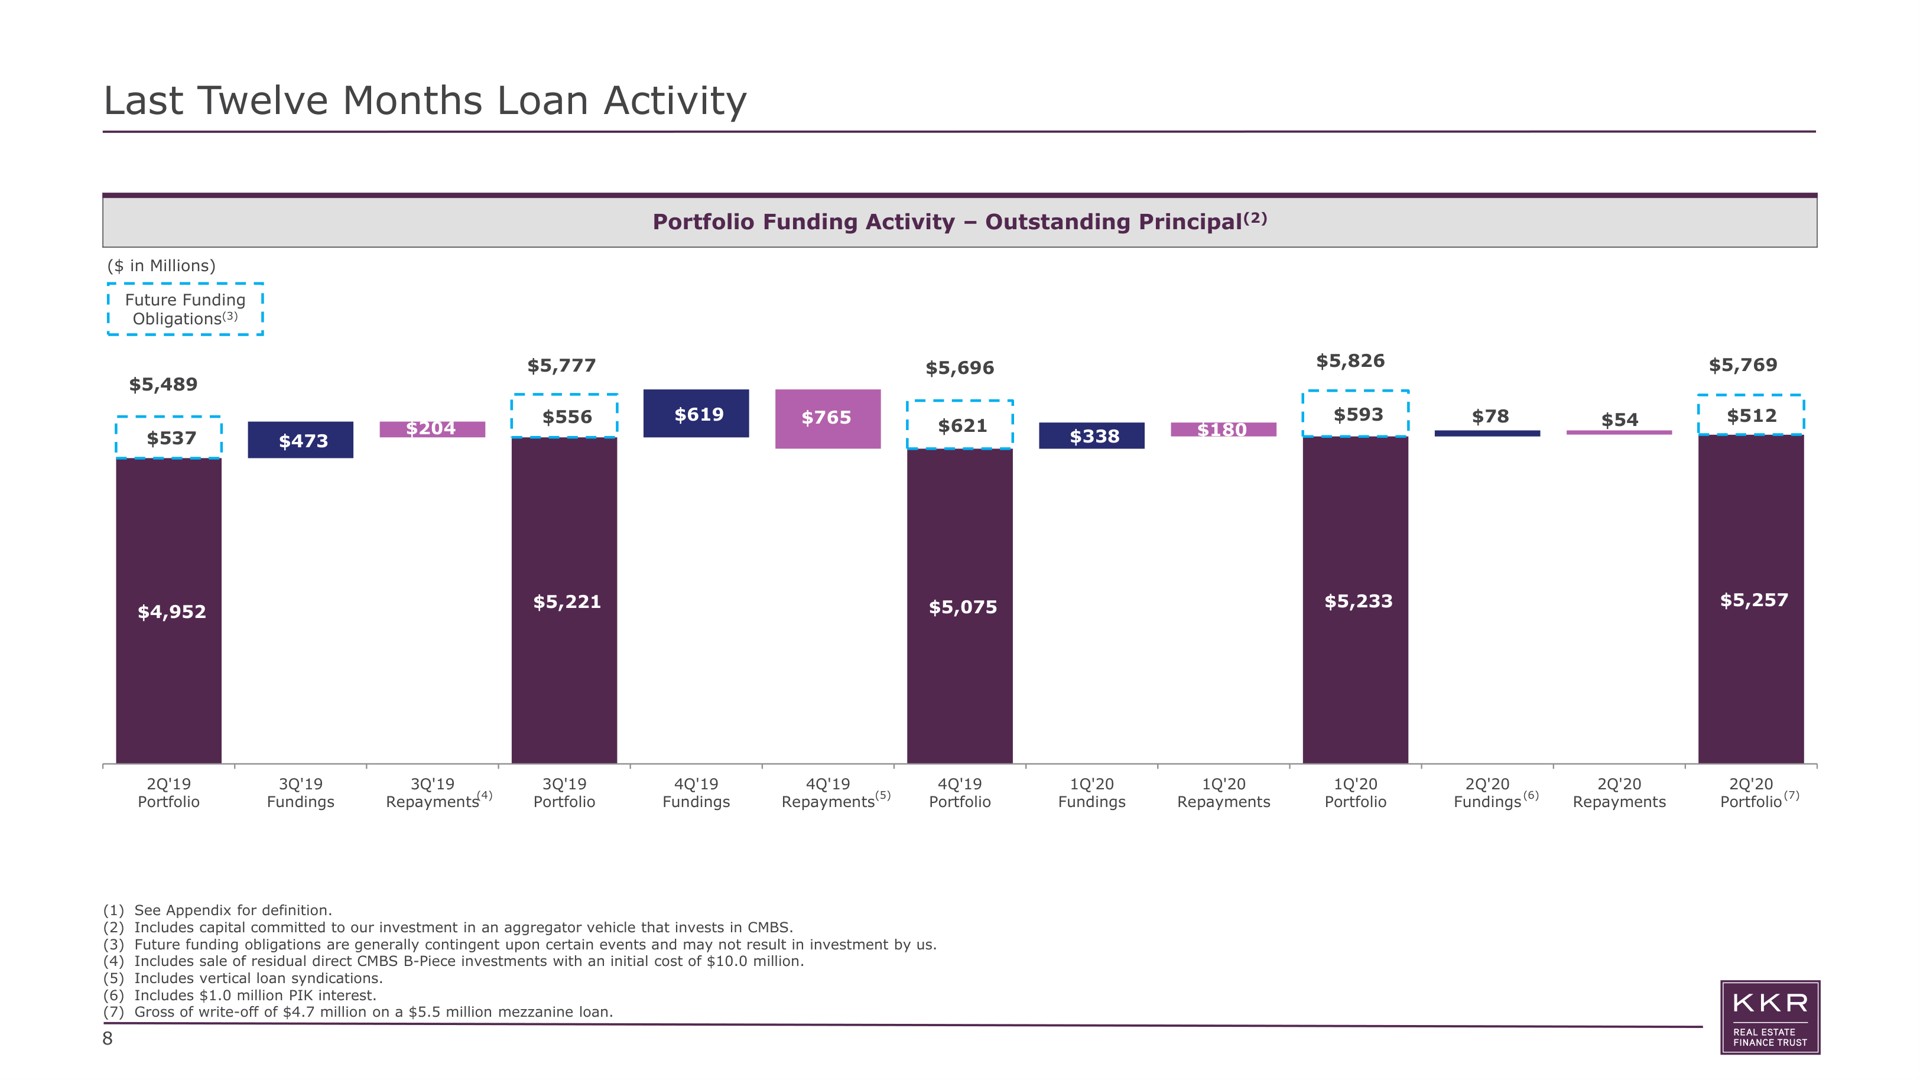 last twelve months loan activity portfolio funding outstanding principal | KKR Real Estate Finance Trust